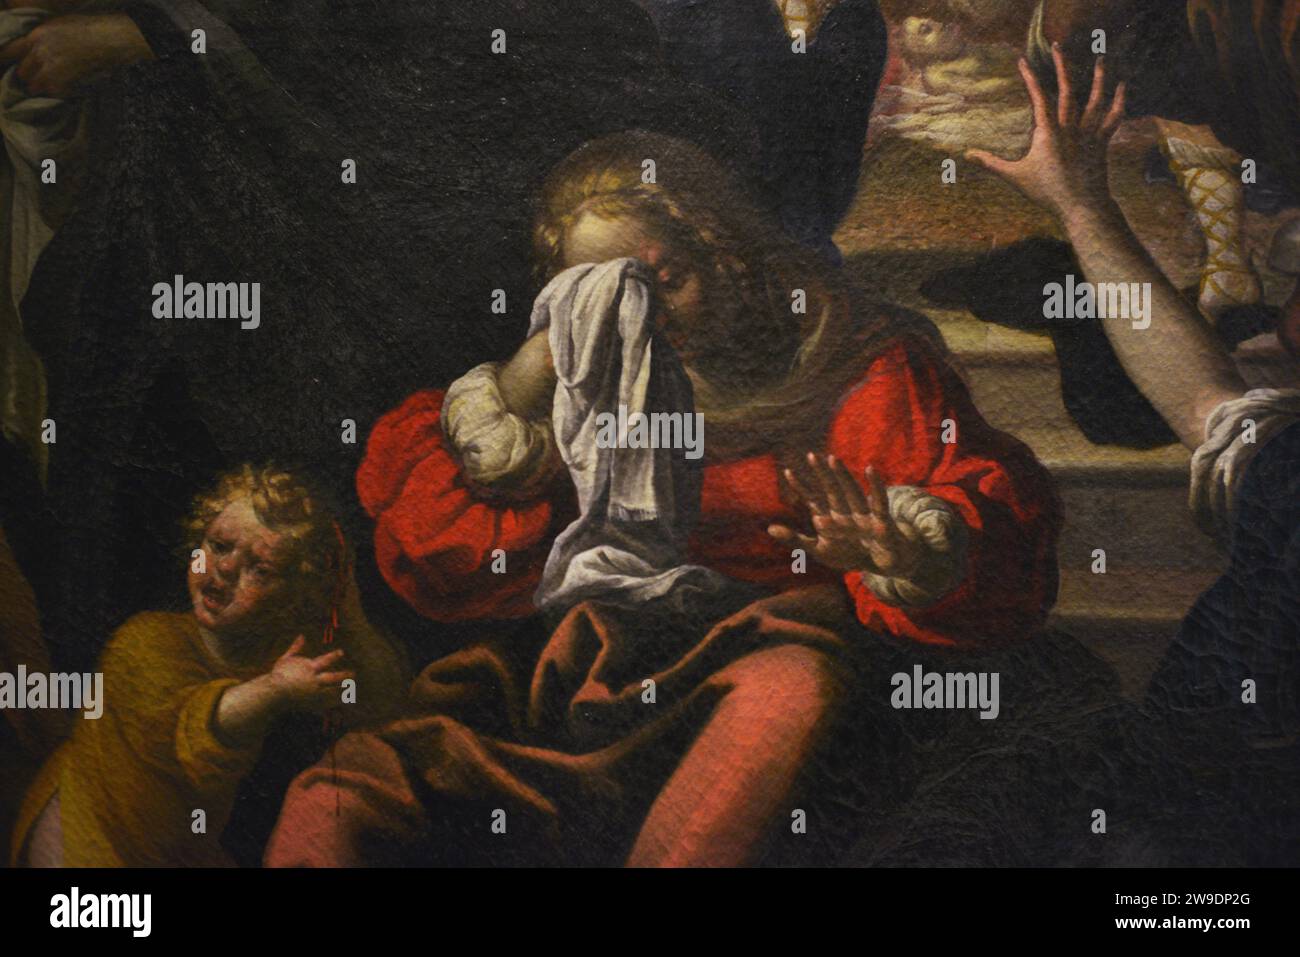 Giovanni Battista Tortiroli (1601-1651). Italian painter. Massacre of the Innocents. Oil on canvas, 1625-1650. Detail. From the church of San Domenico. Museo Civico Ala Ponzone. Cremona. Lombardy. Italy. Stock Photo